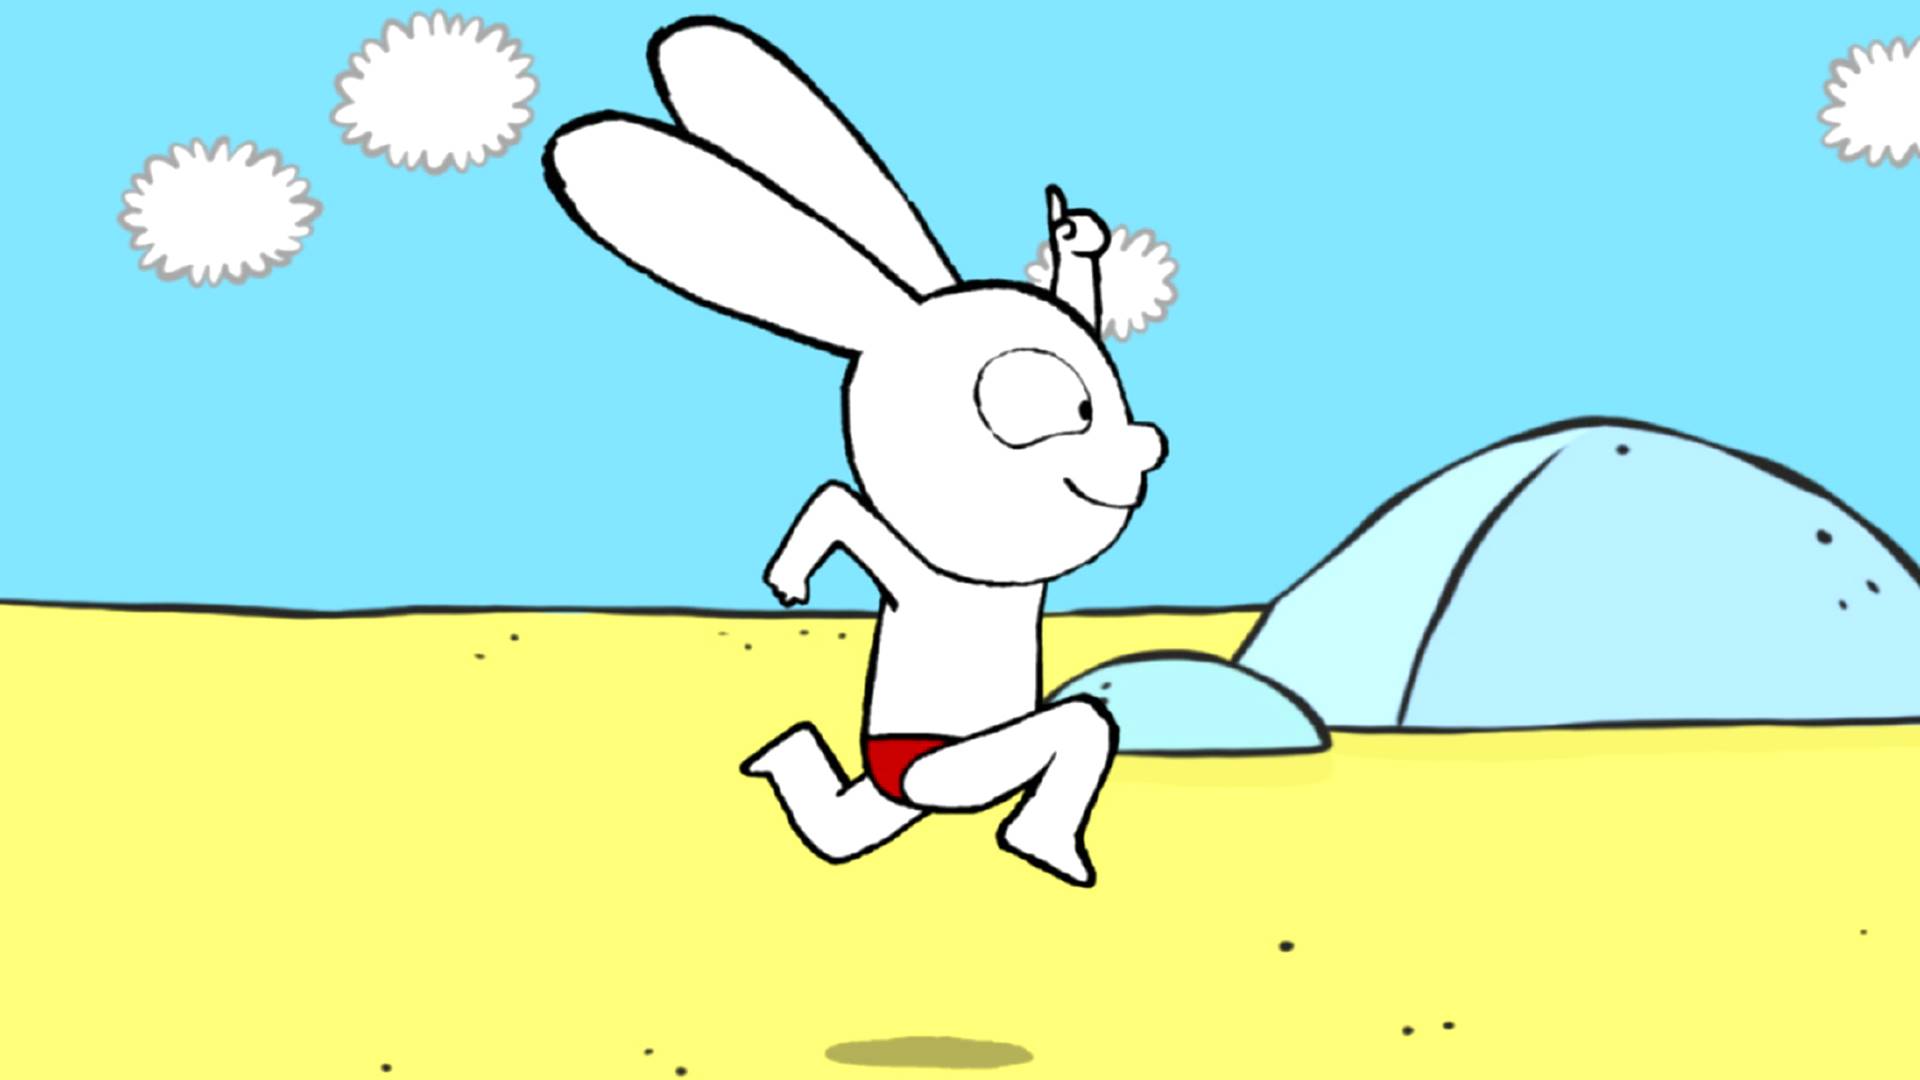 Simon Super rabbit Official Website - Games, Videos, Activities